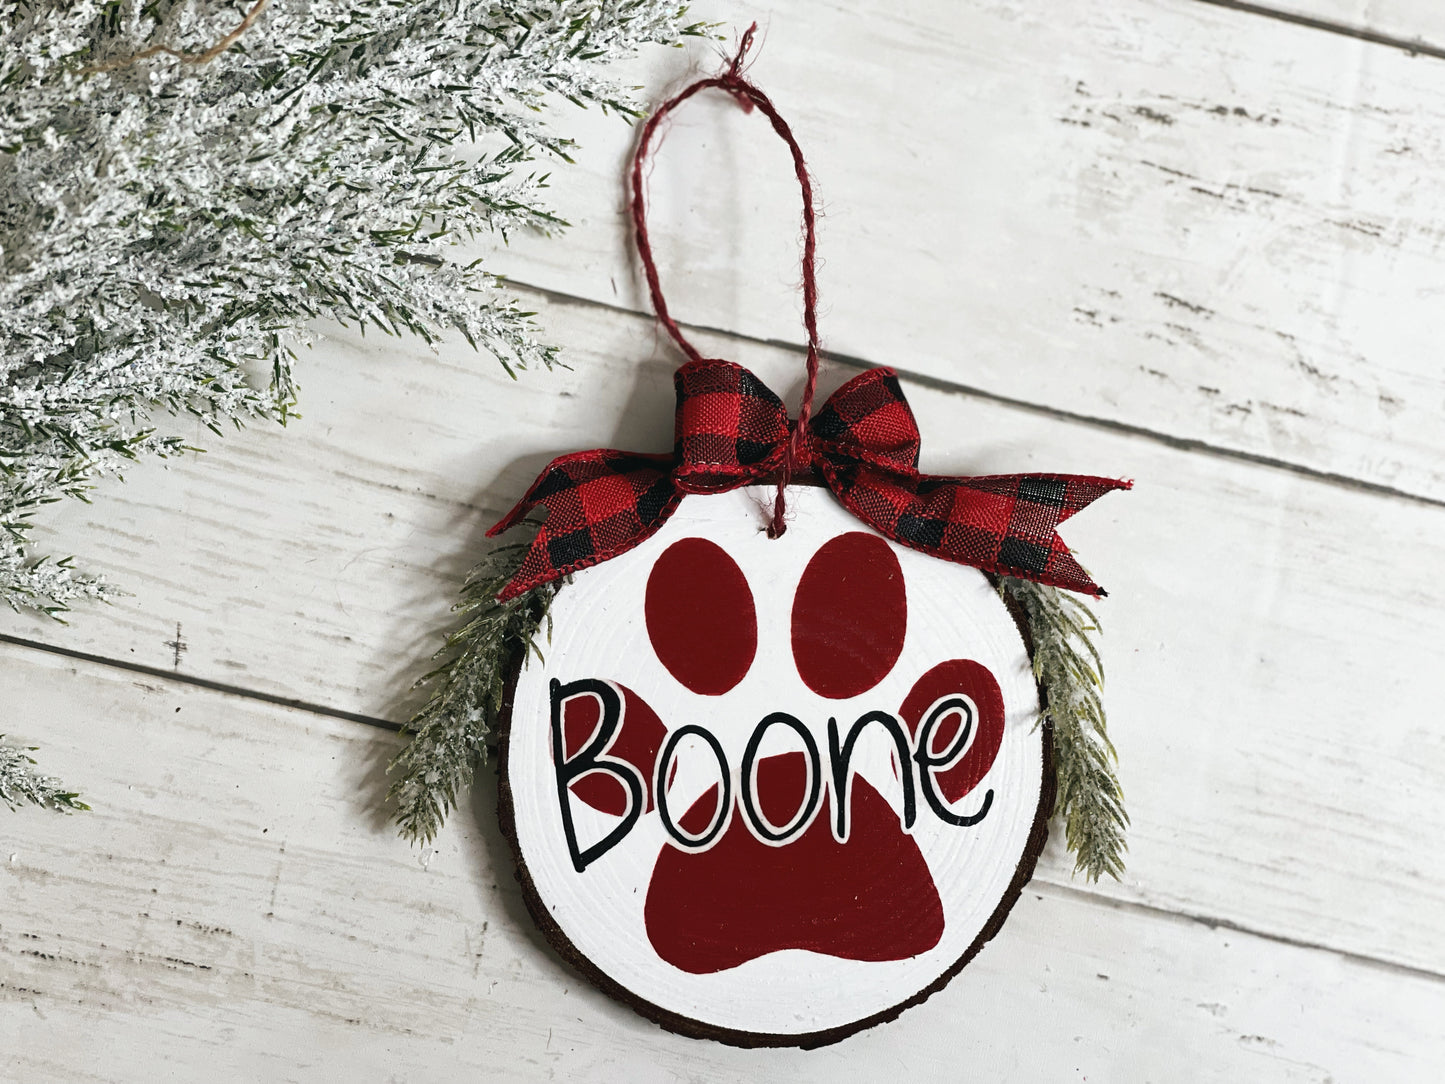 Pet - Christmas Ornament (PRE-ORDER)